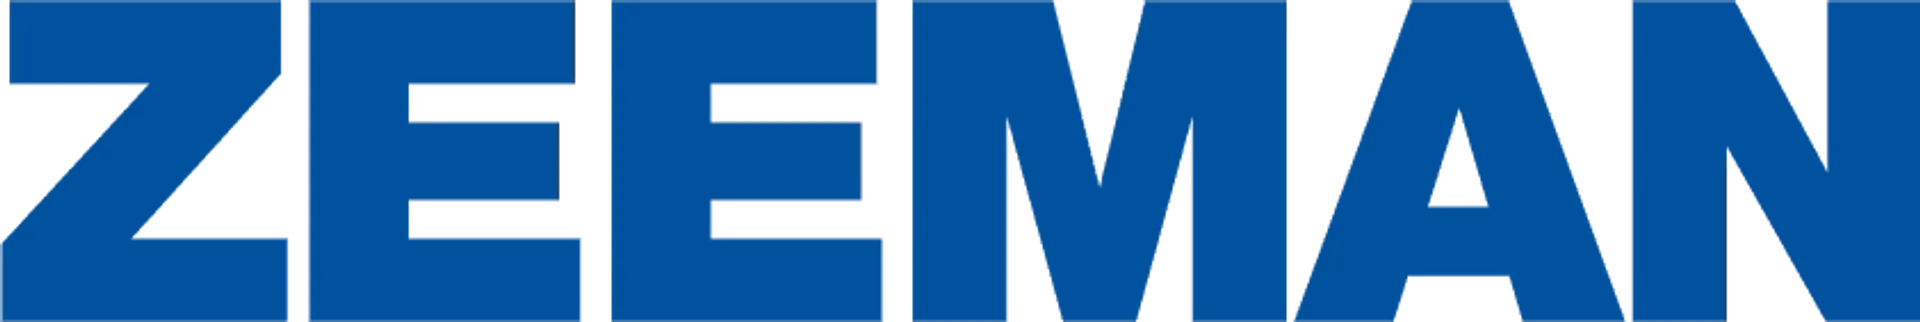 ZEEMAN logo de catálogo